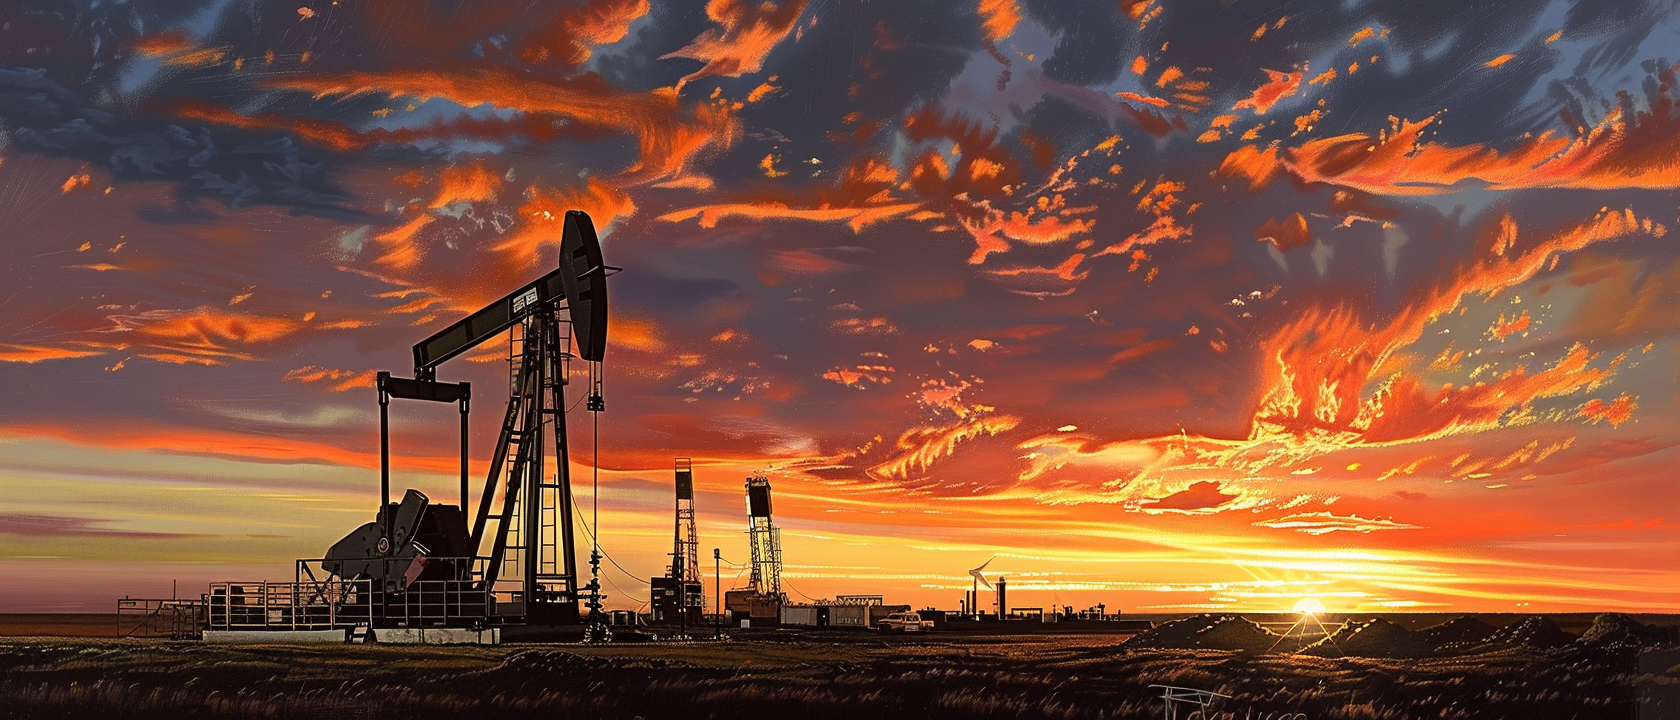 Decline in U.S. Drilling Activity Persists